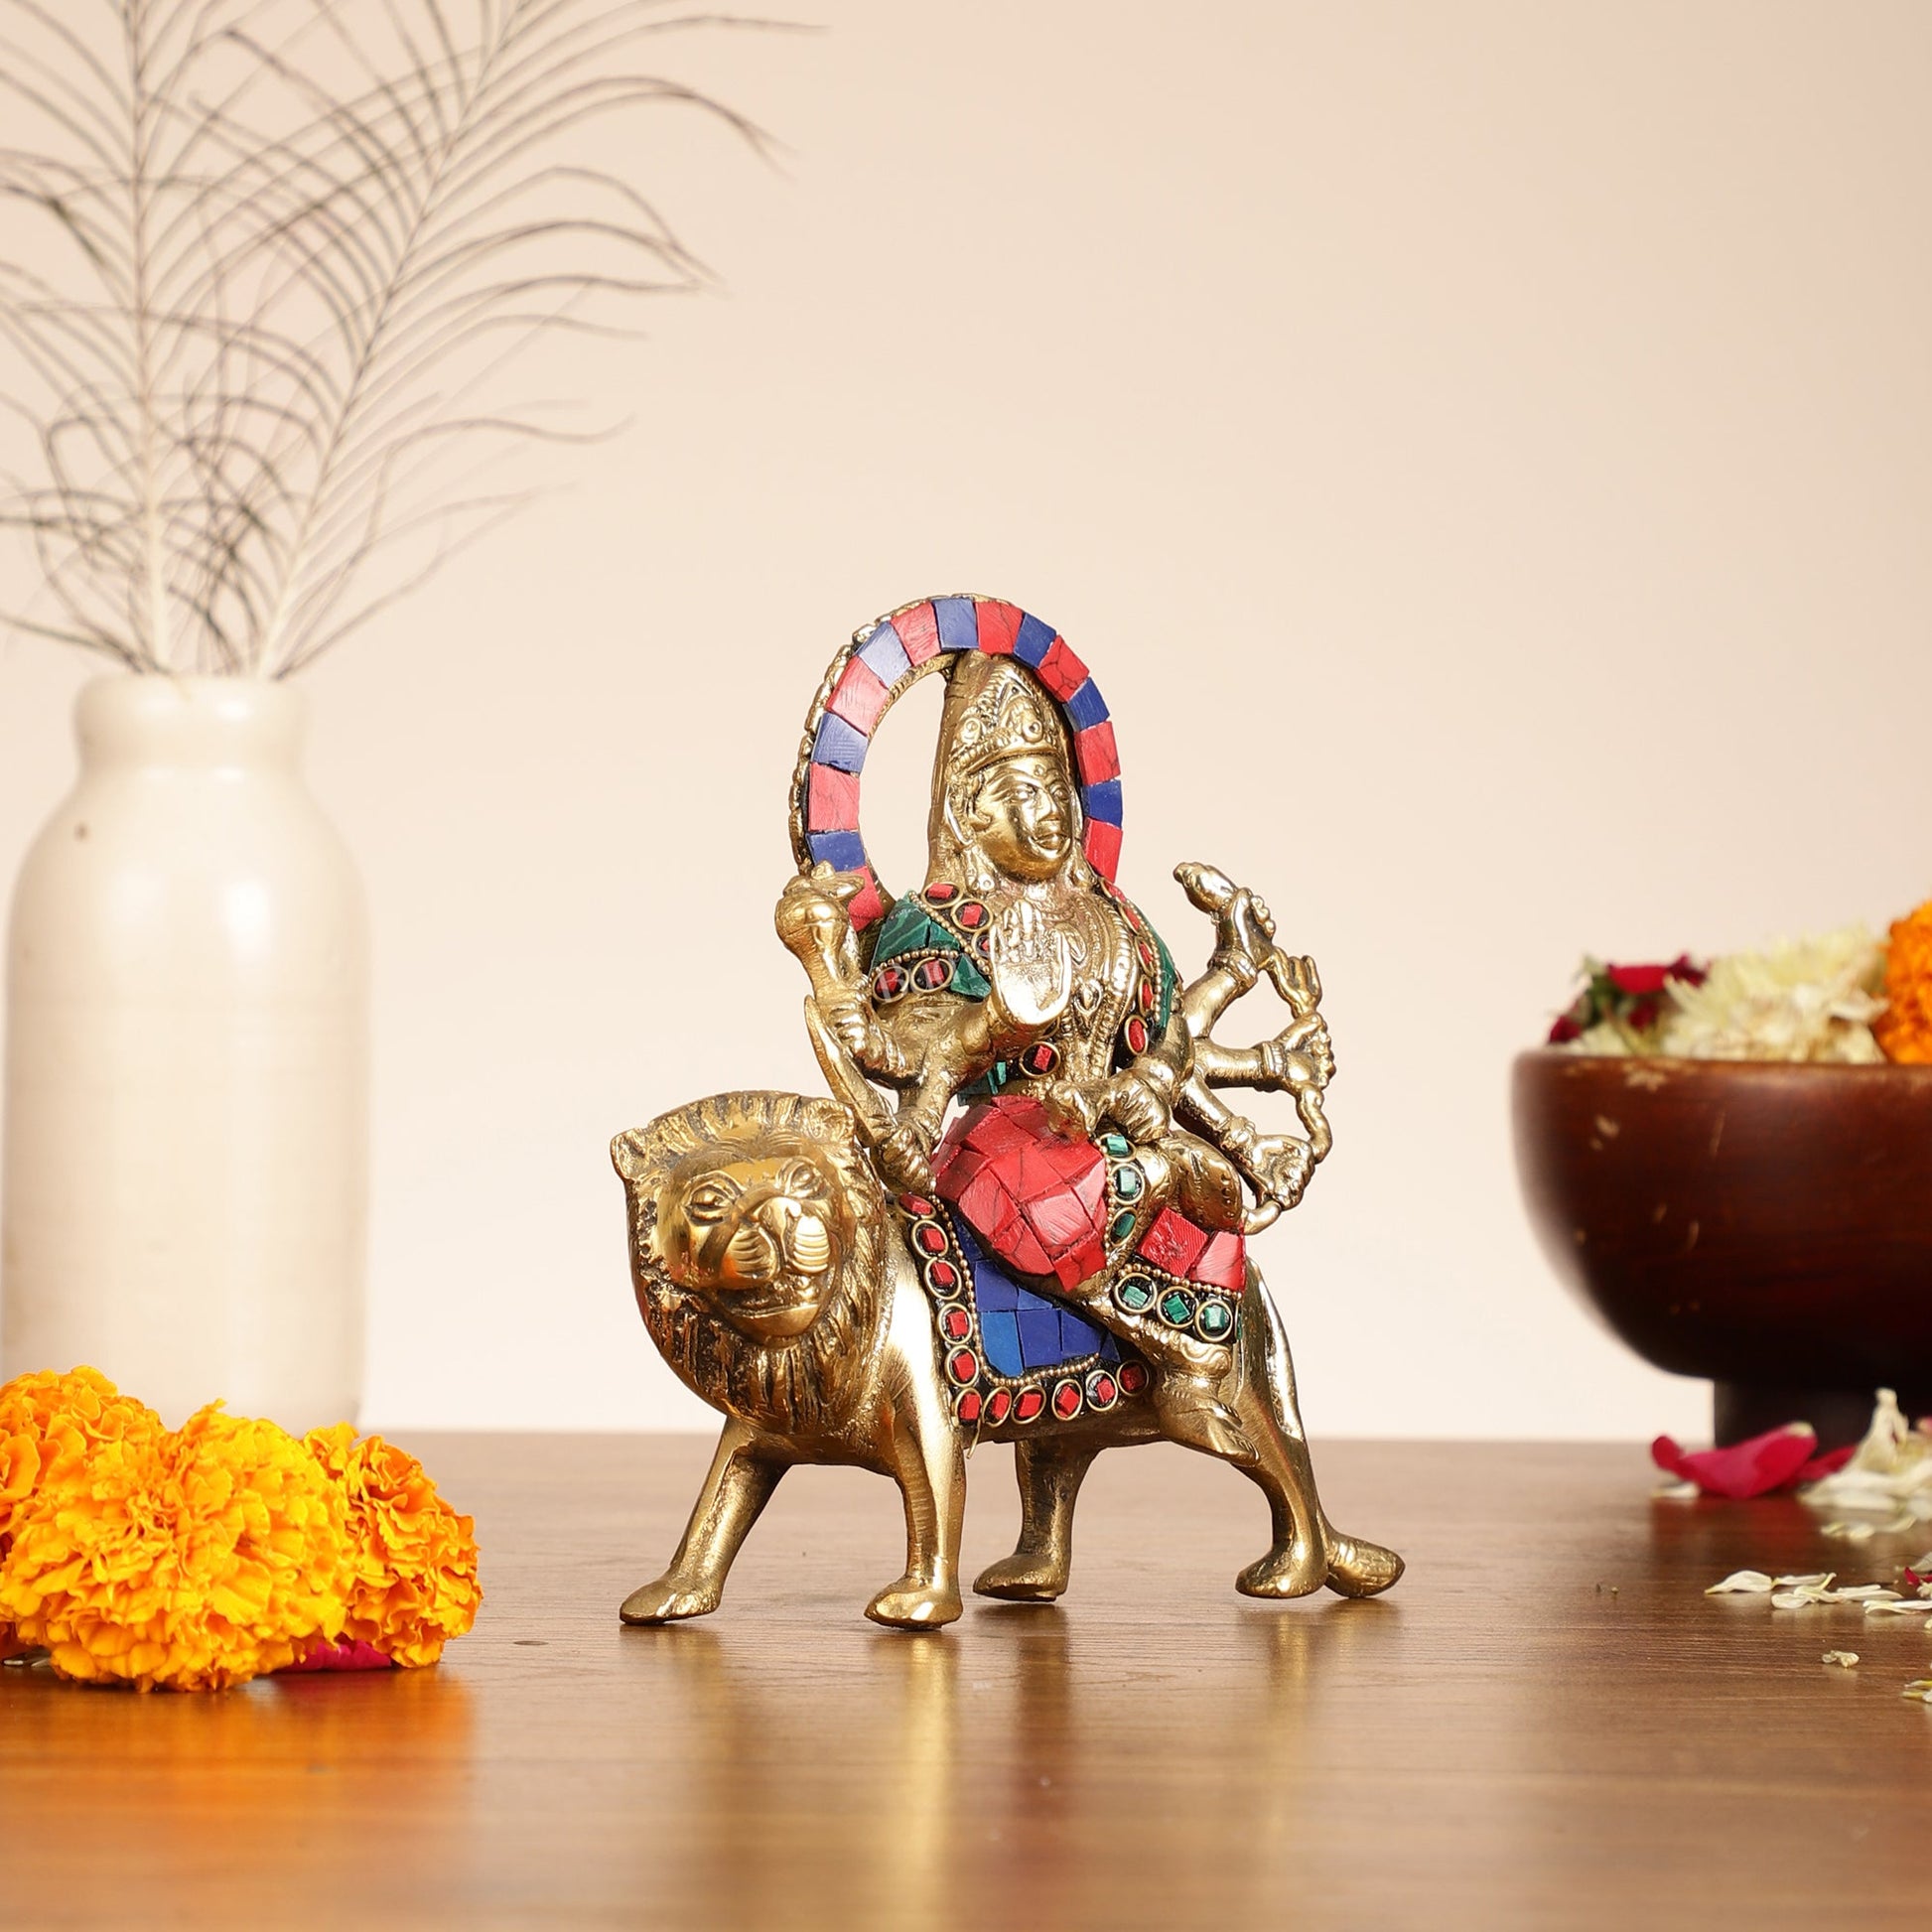 Goddess Durga brass idol with 8 arms sitting on lion with inlay stonework - Budhshiv.com